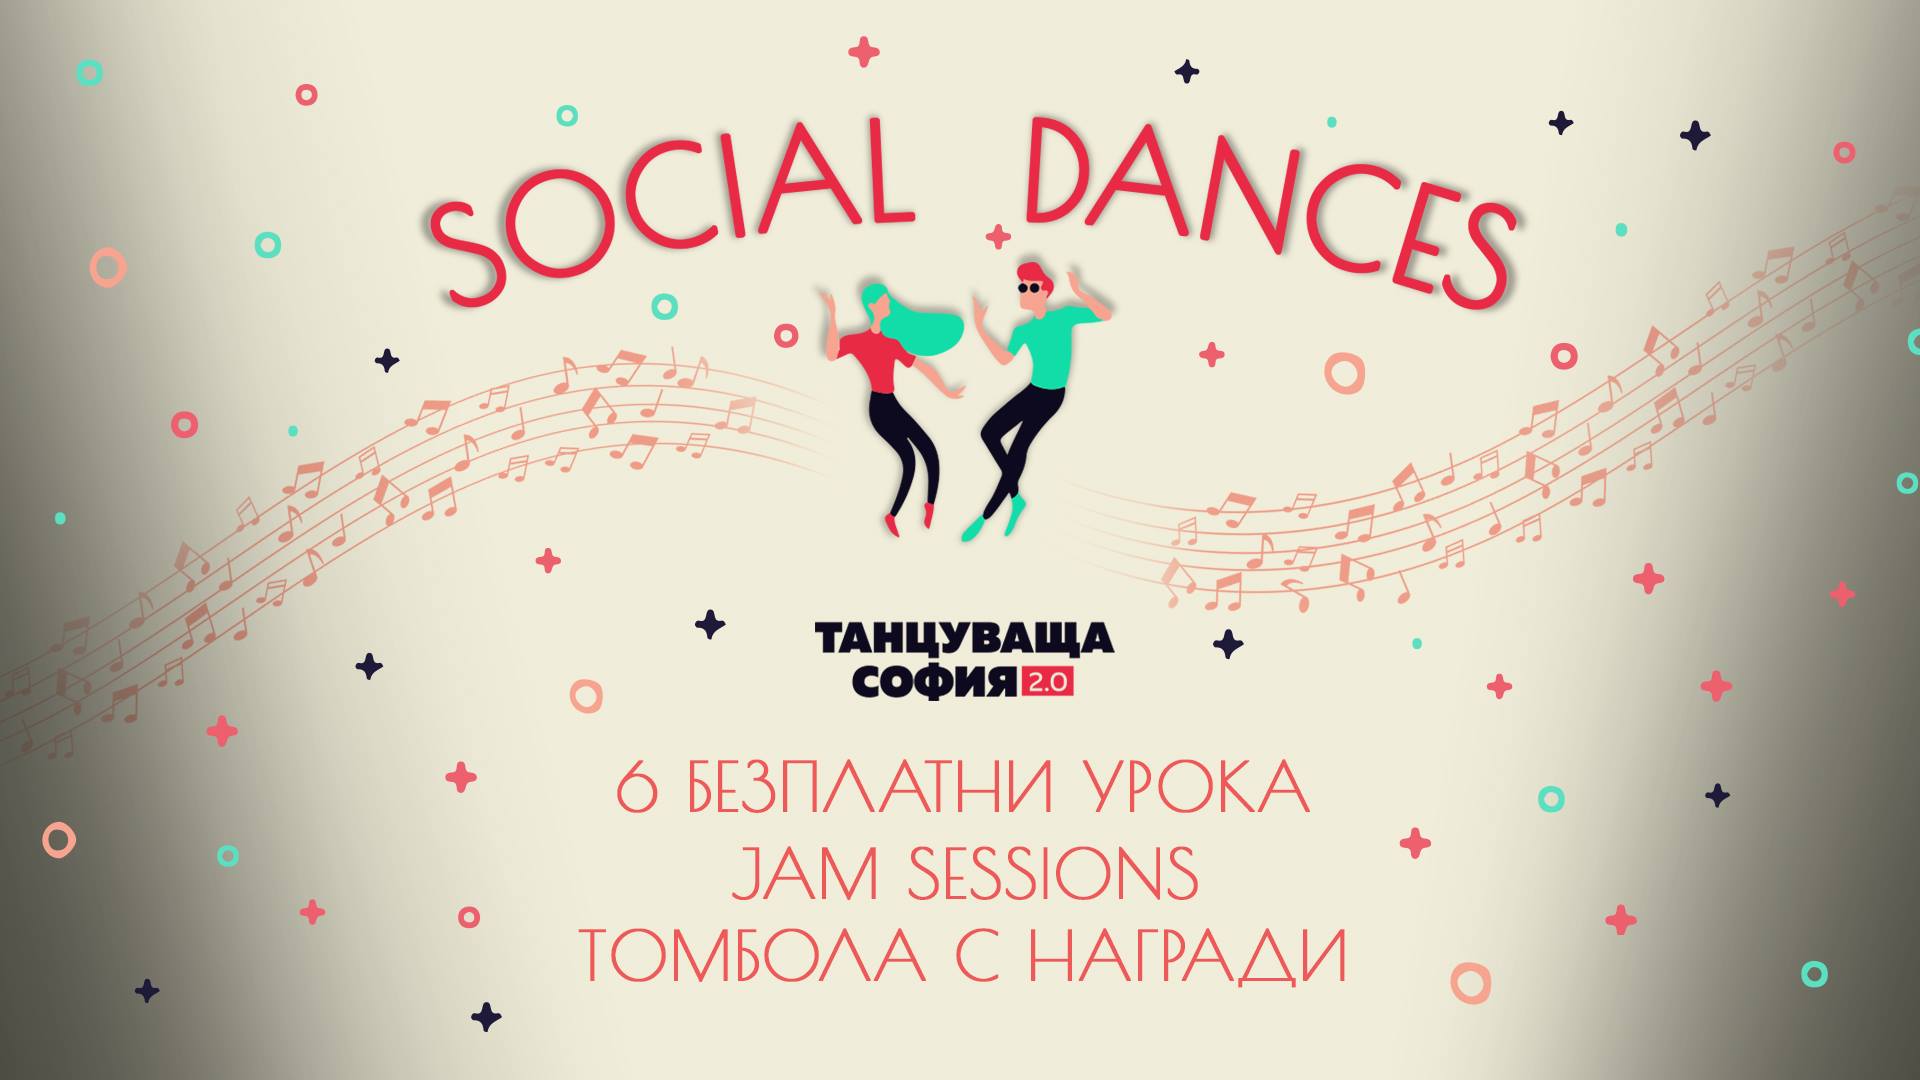 Танцуваща София 2.0 | Social Dances [вход свободен]